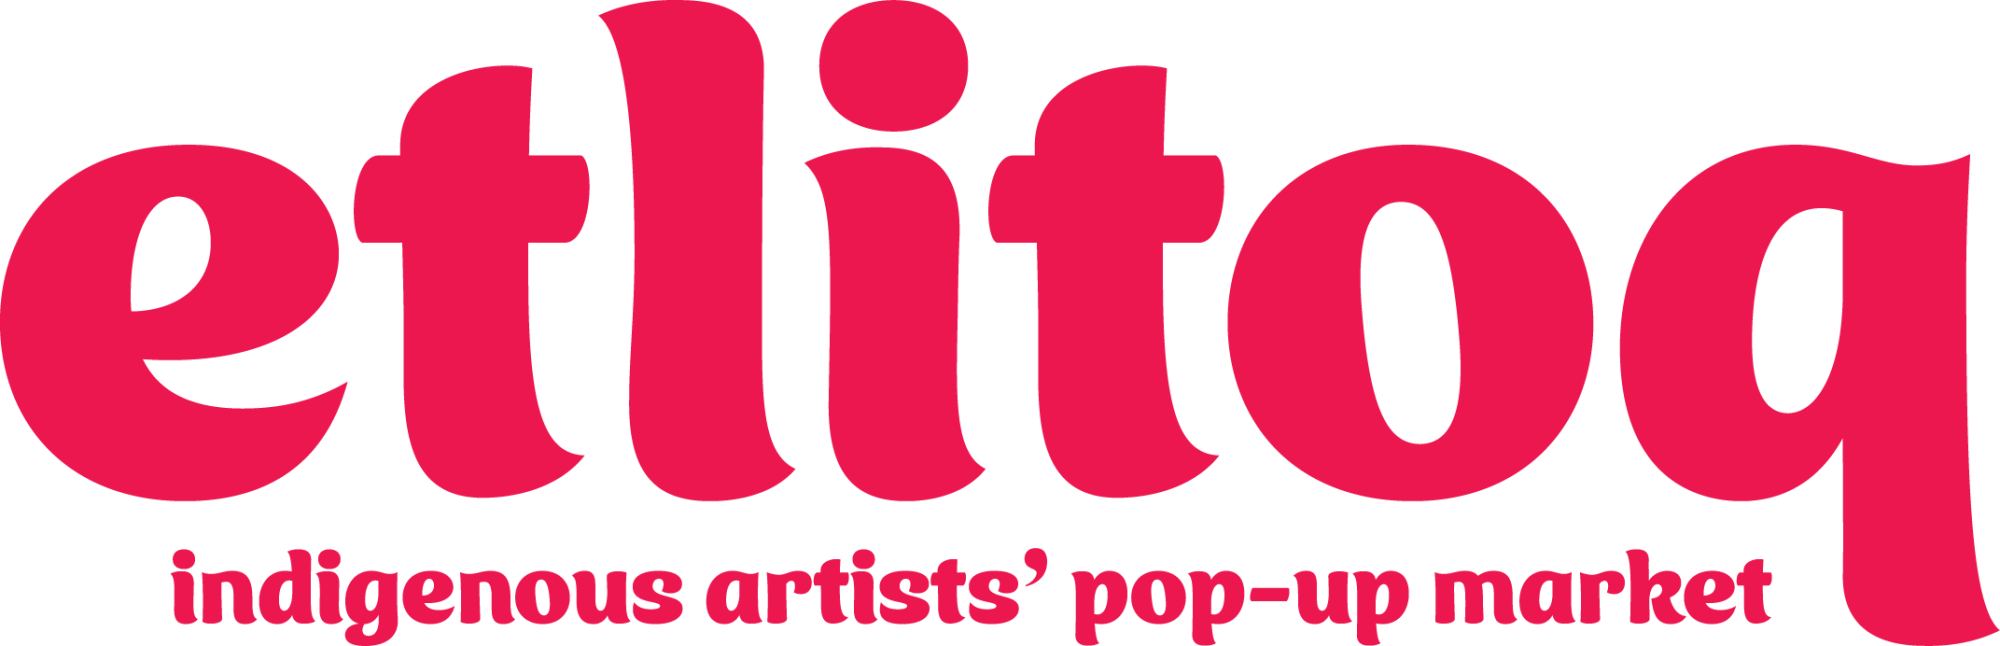 Etlitoq logo "Indigenous Artists' Pop-Up Market"